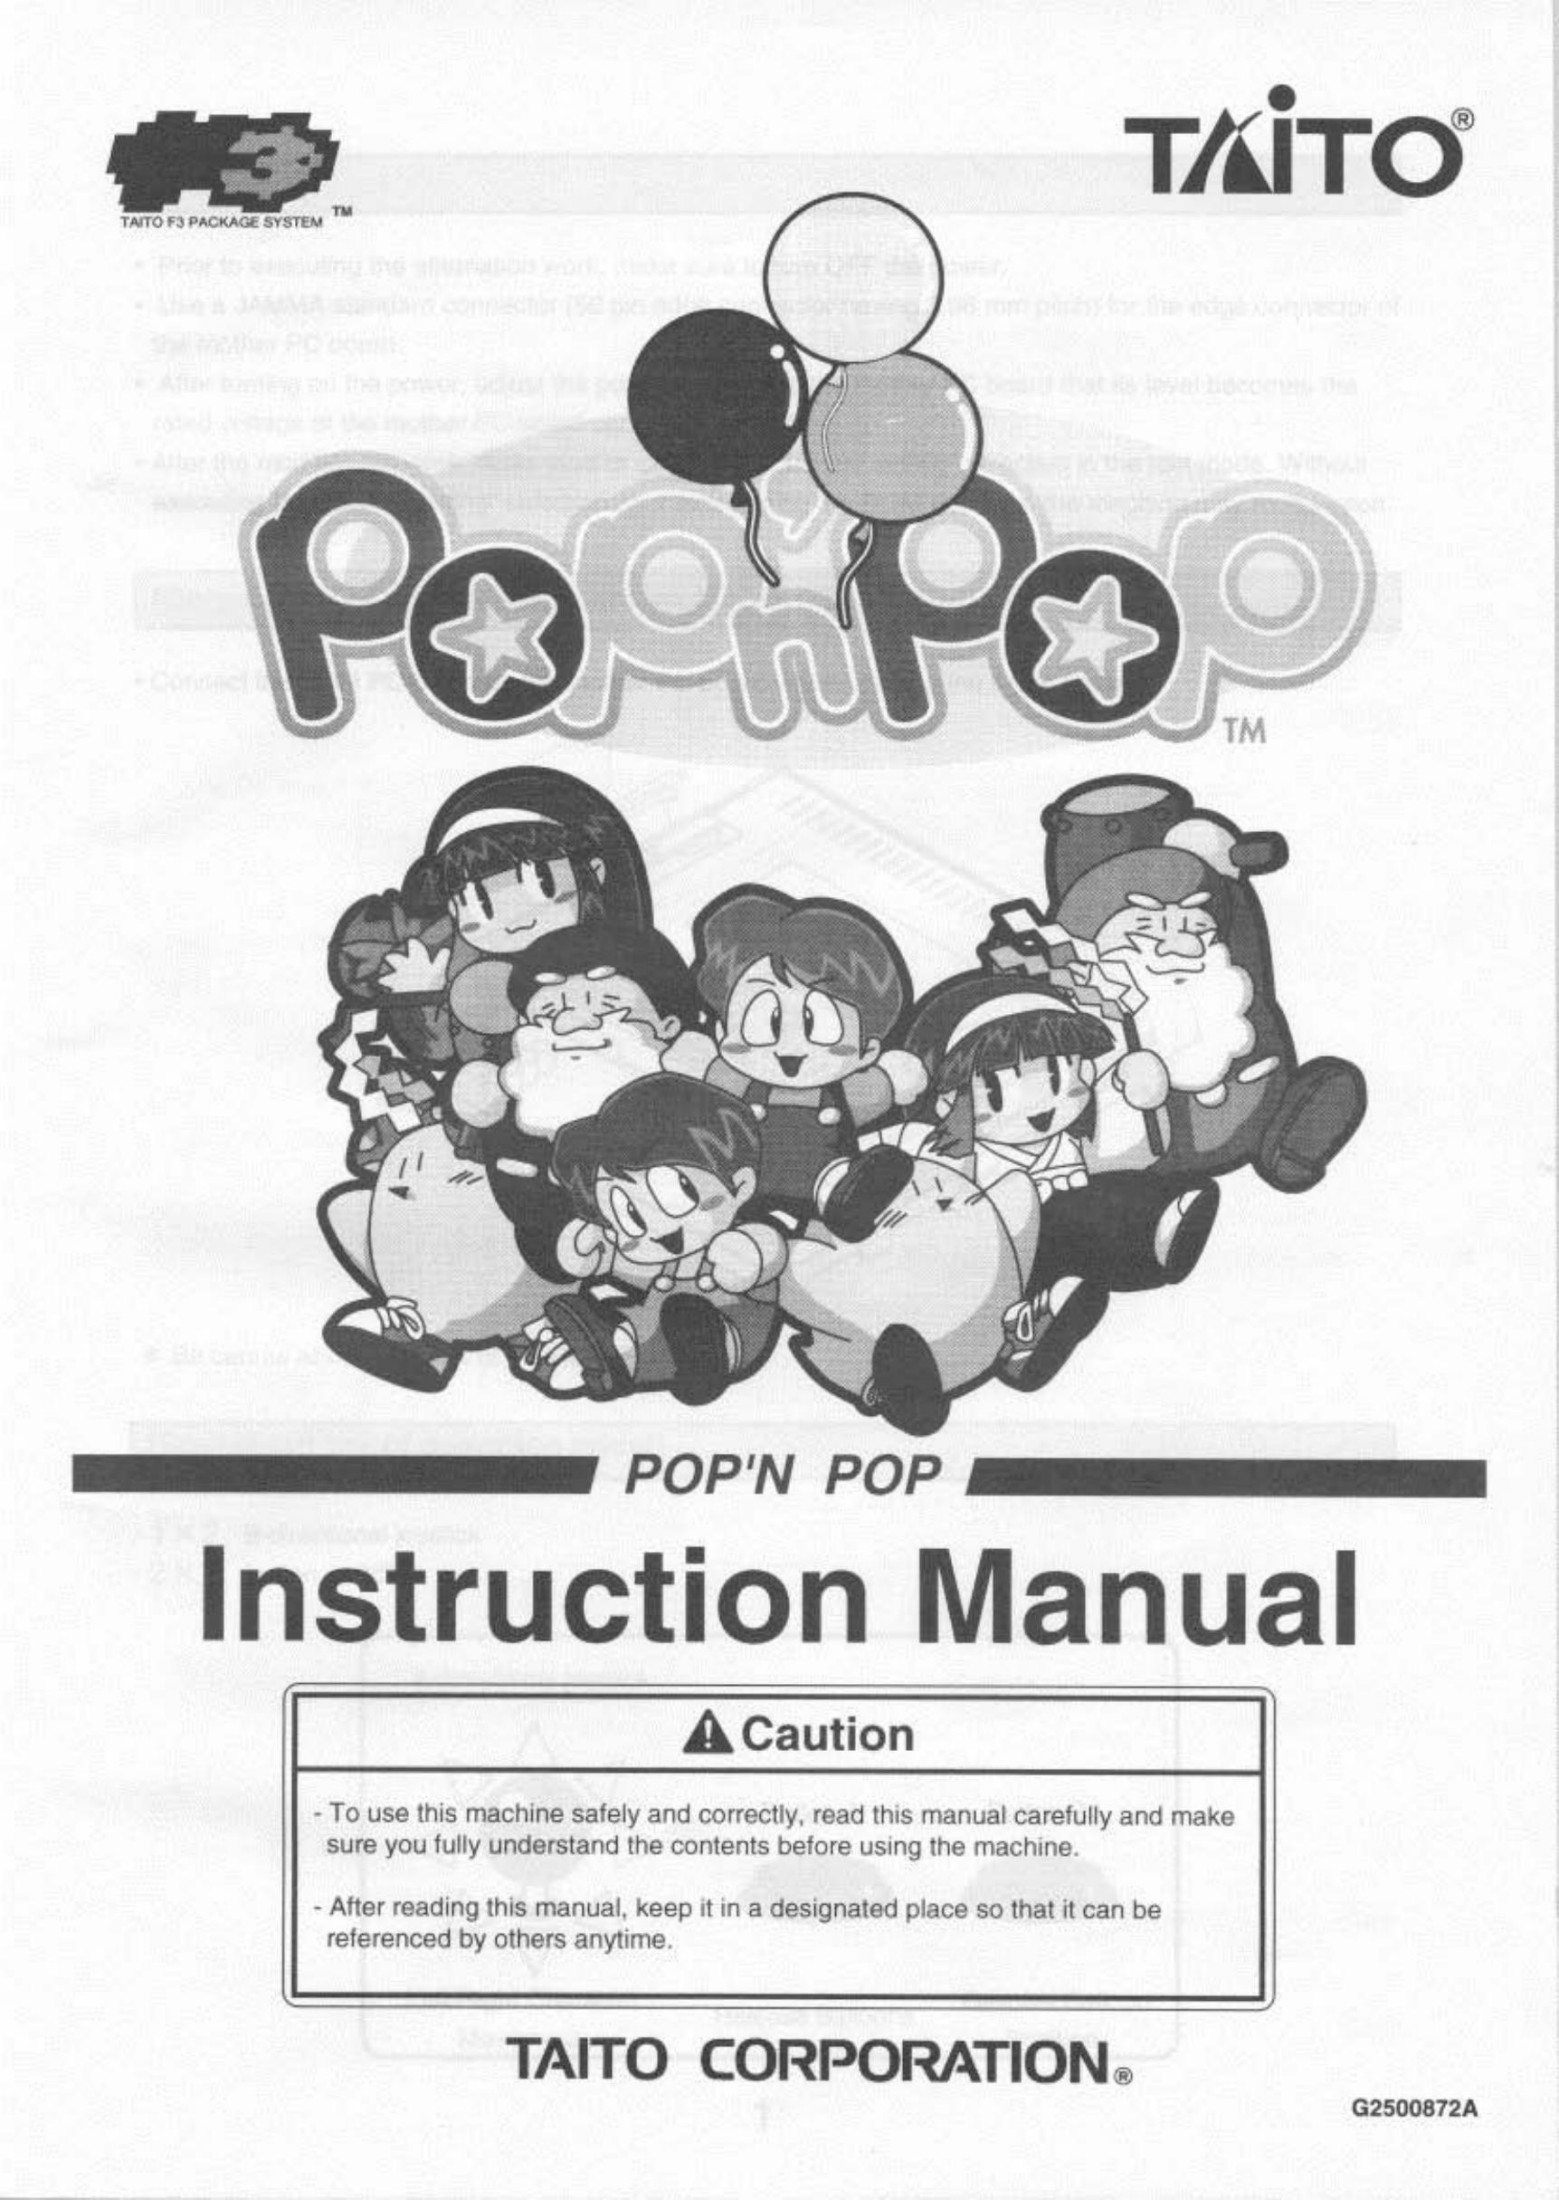 Pop'n Pop Instruction Manual (English)